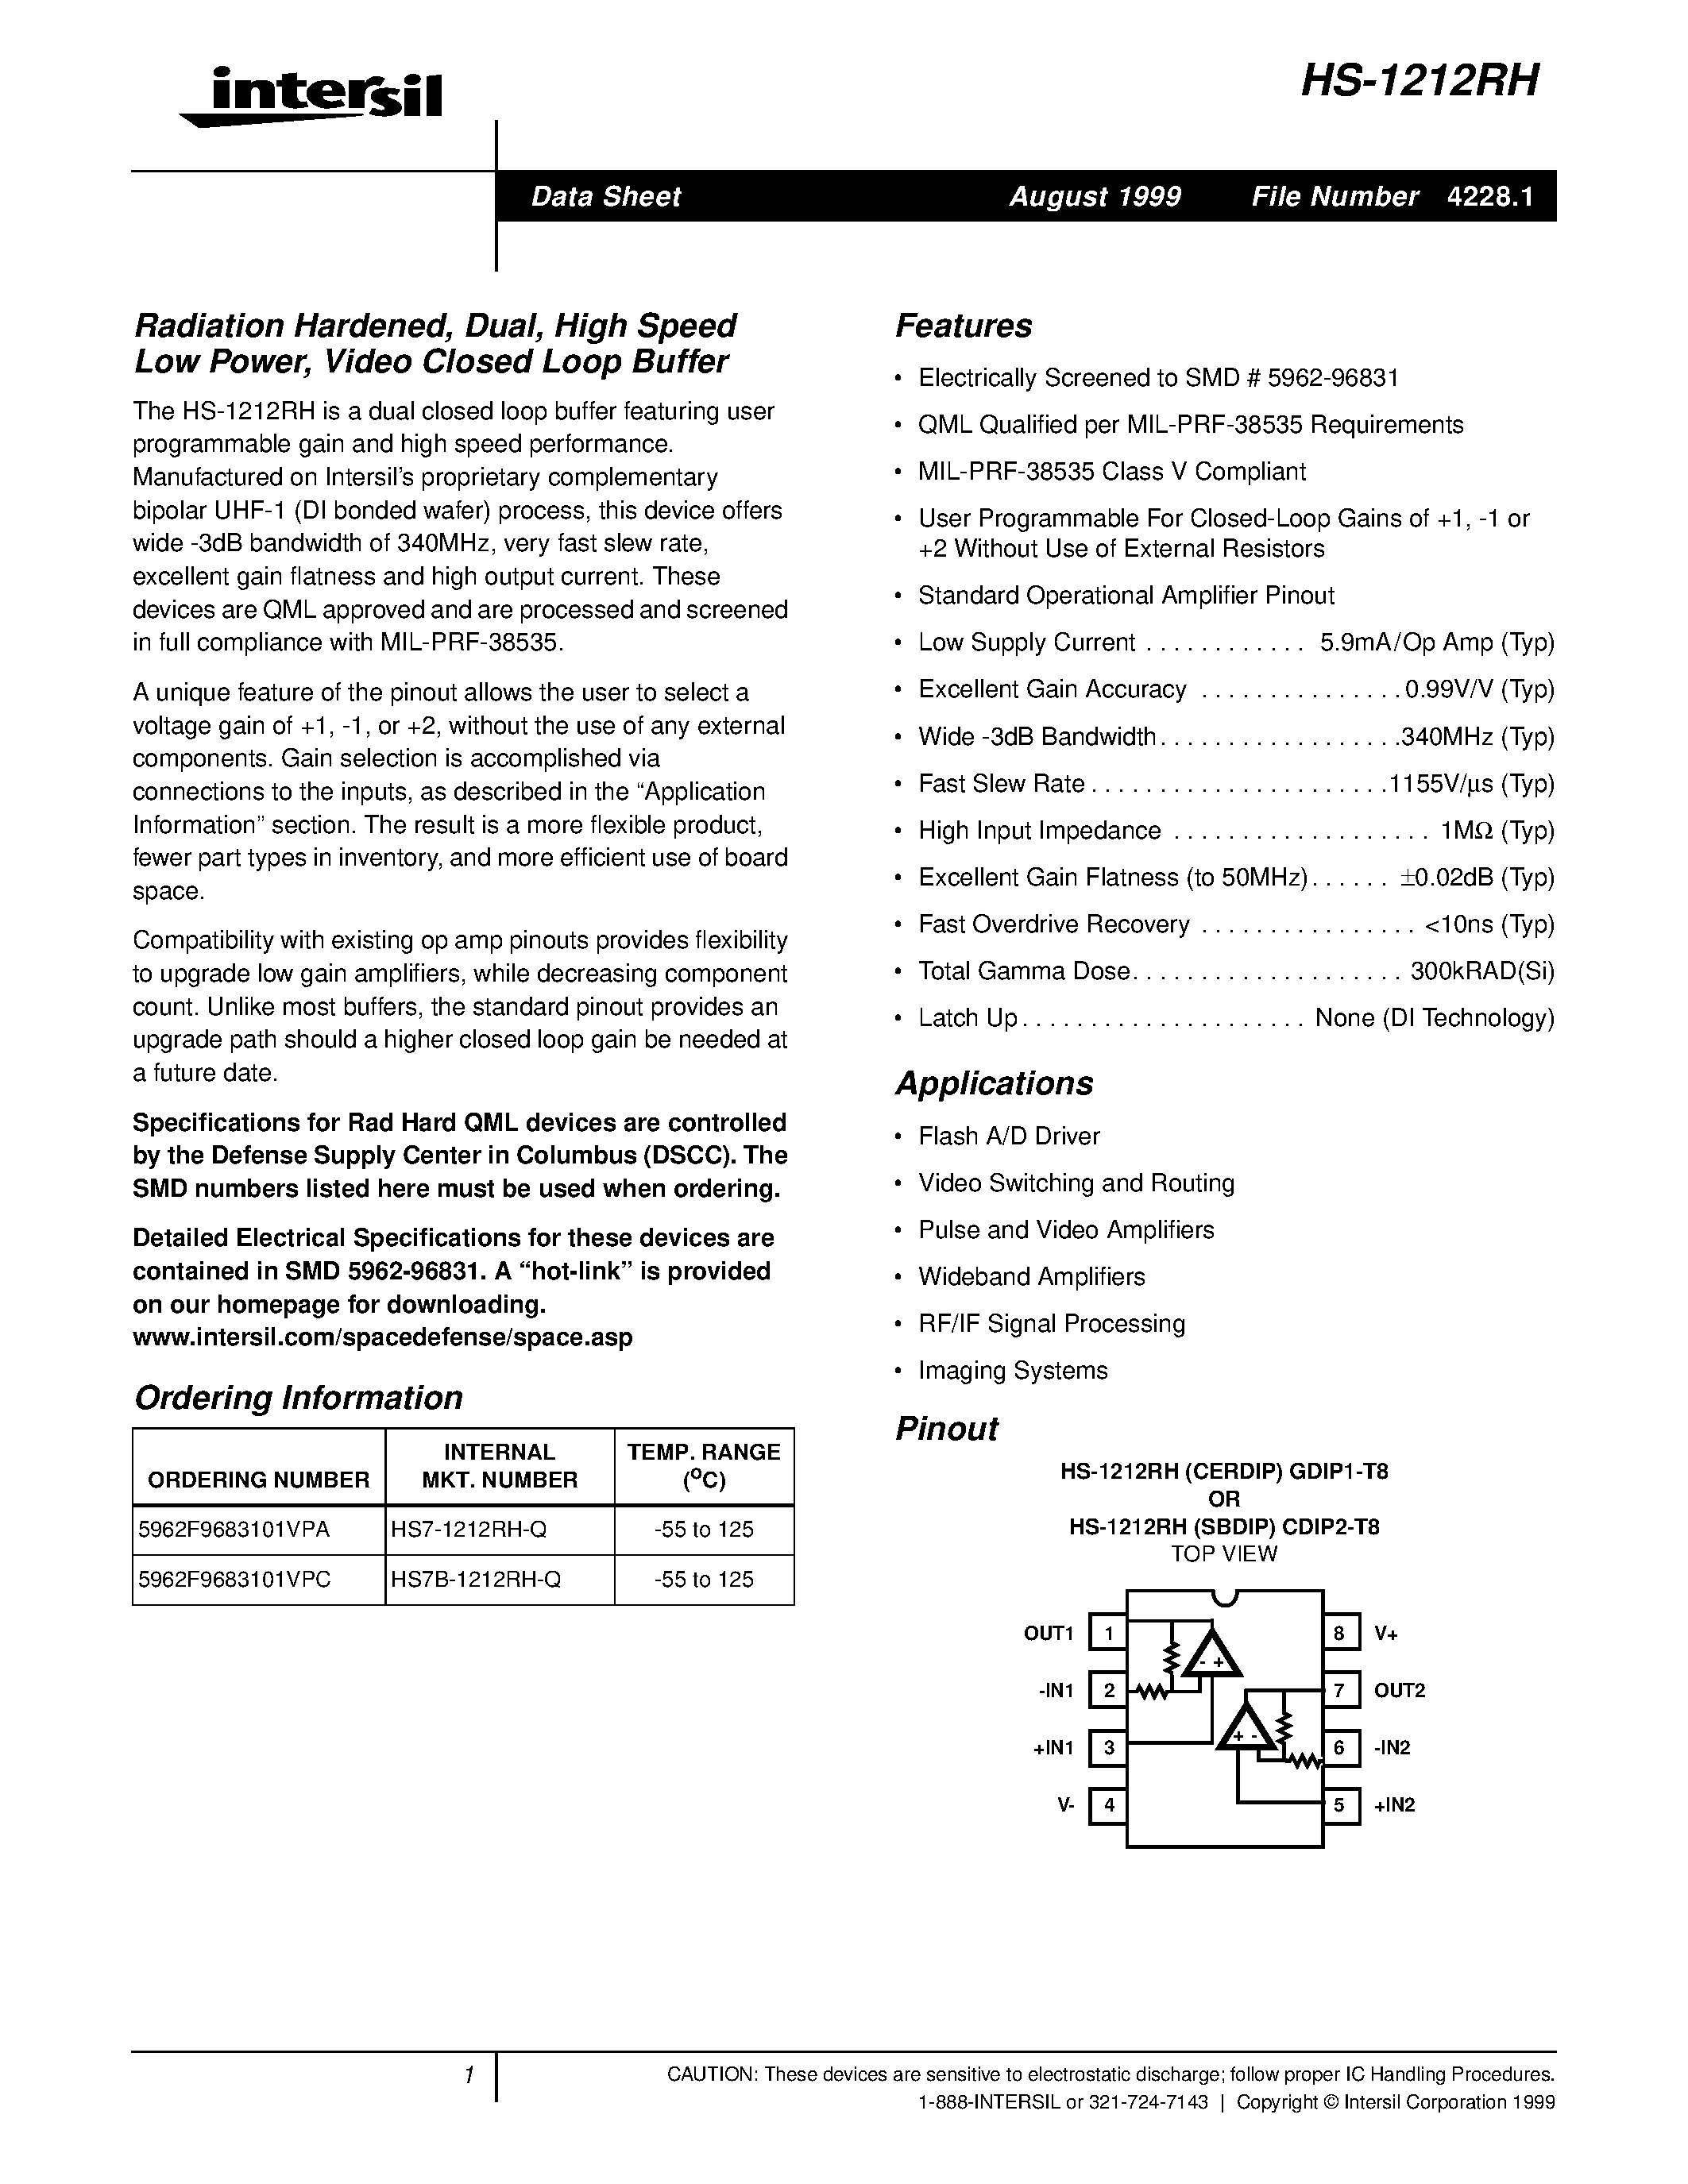 Даташит HS7B-1212RH-Q - Radiation Hardened/ Dual/ High Speed Low Power/ Video Closed Loop Buffer страница 1